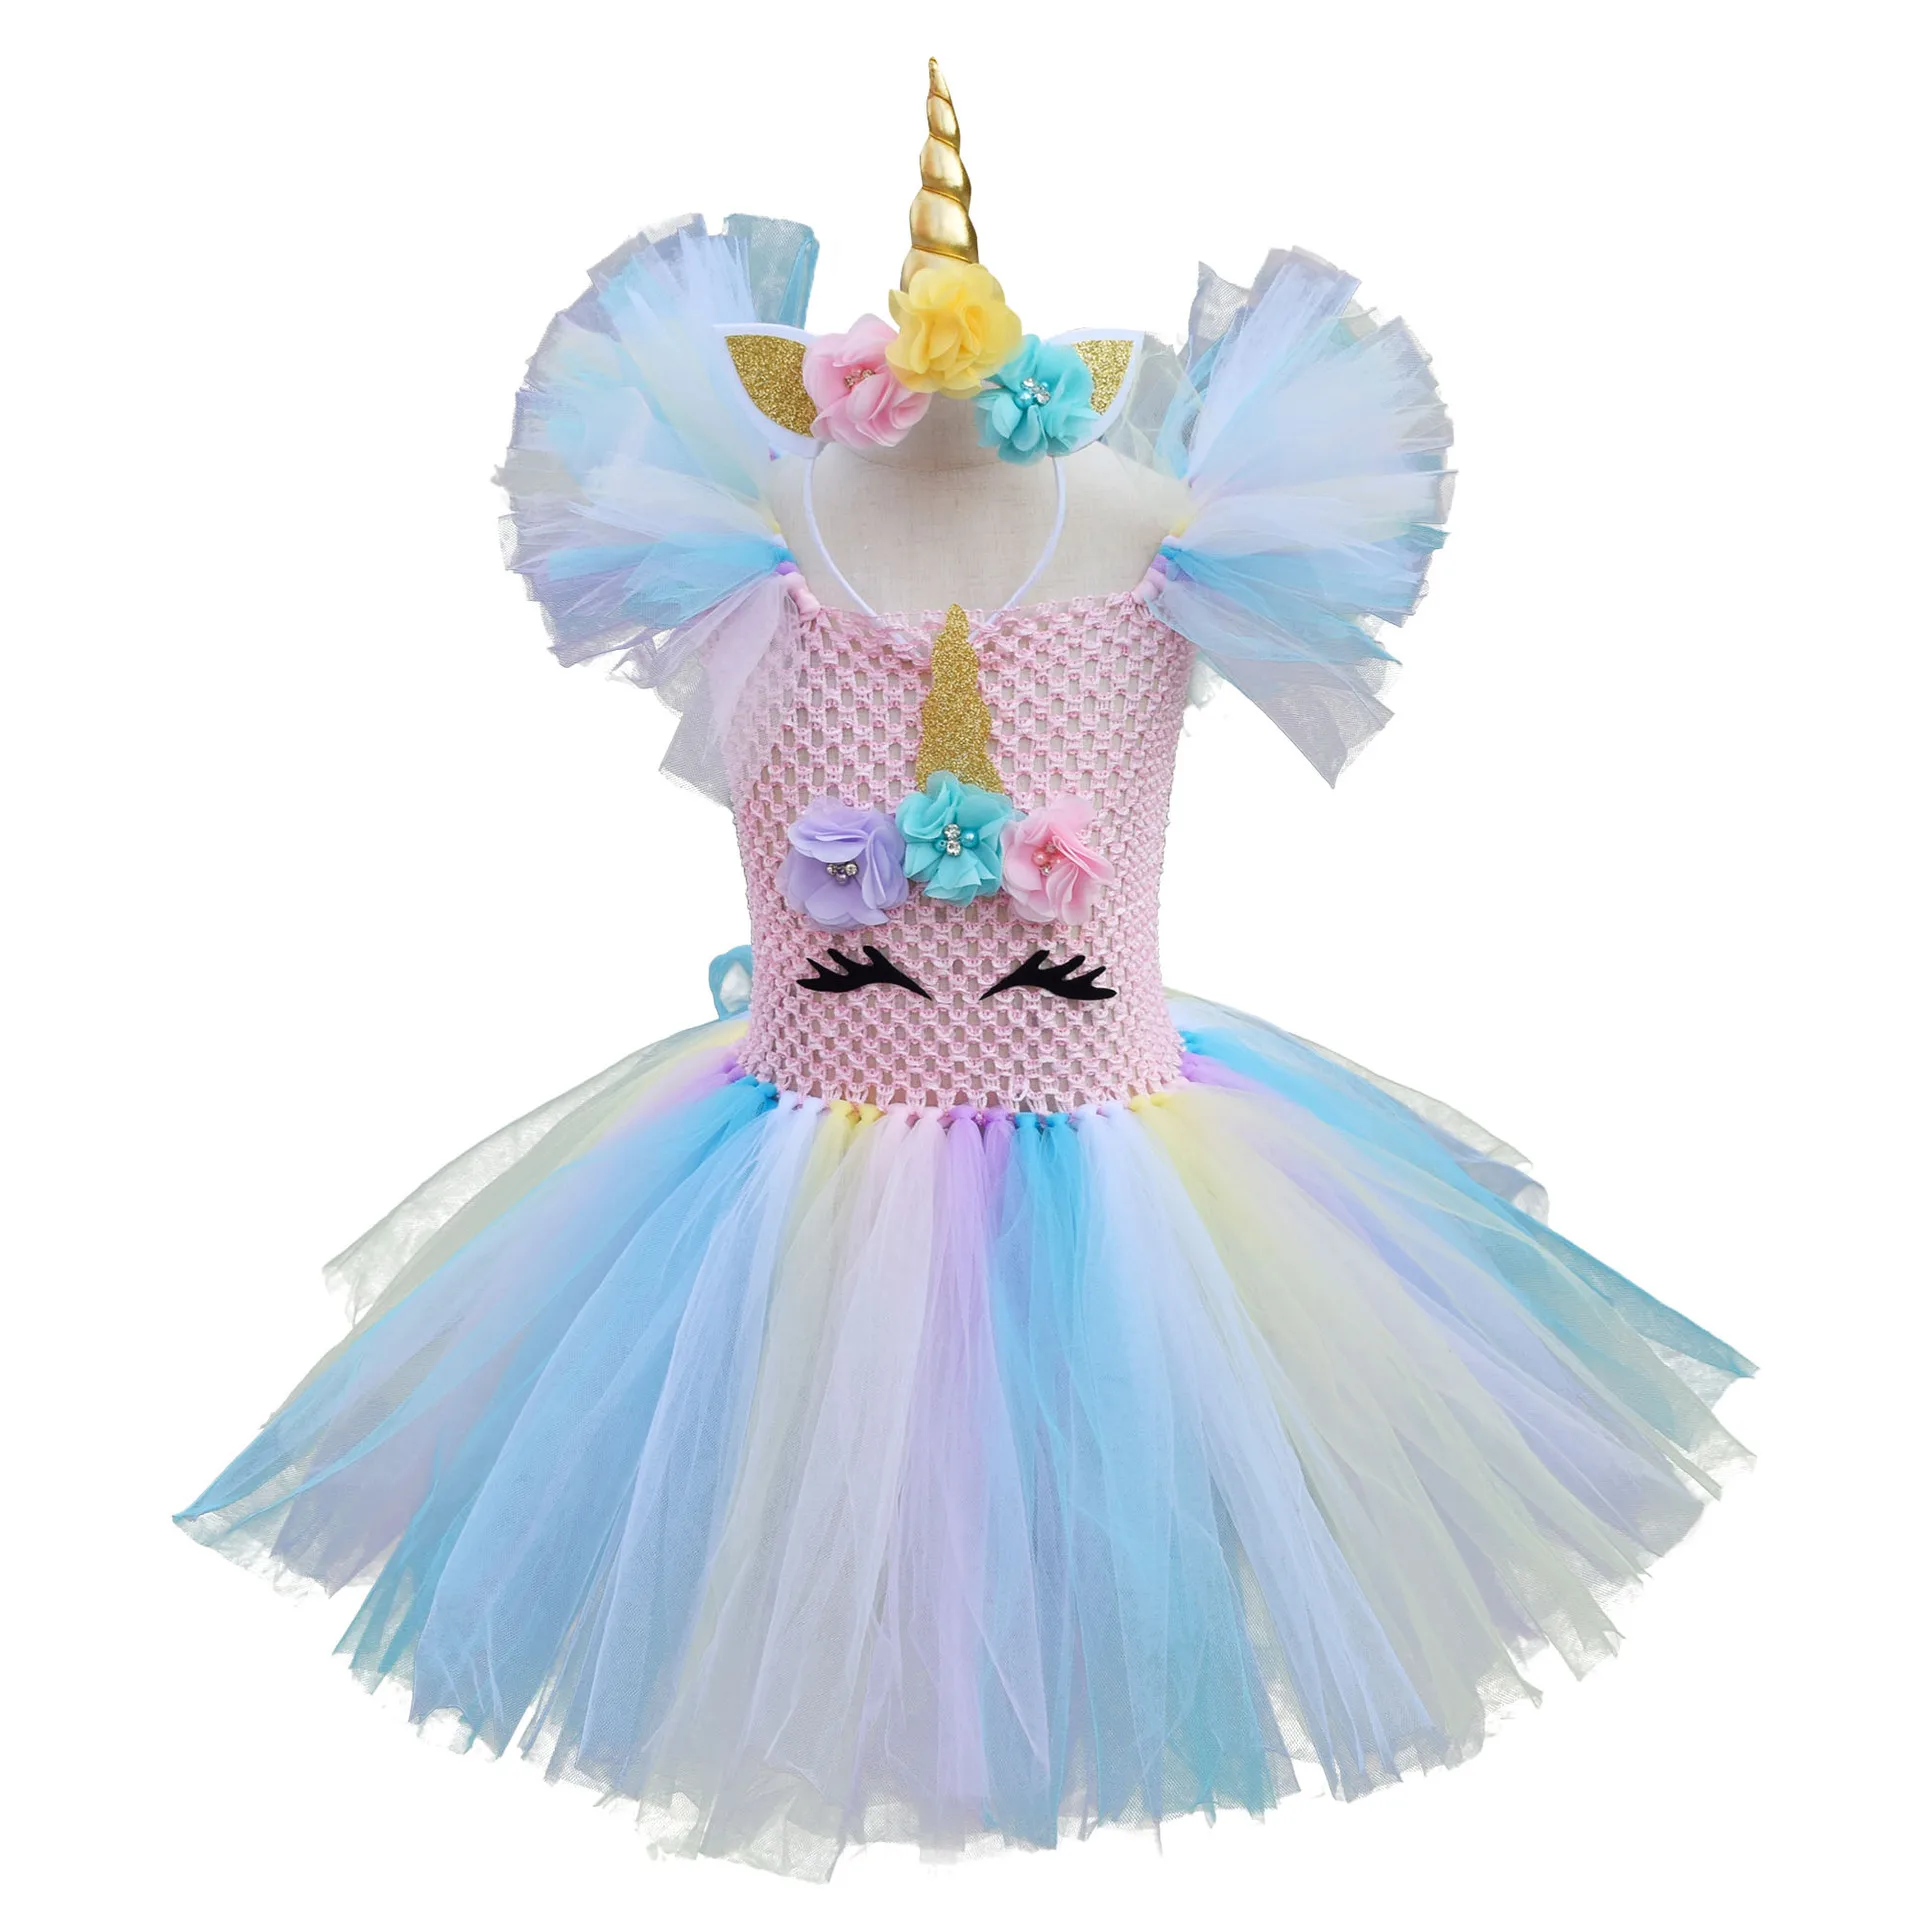 

Pastel Unicorn Dress for Girls Flower Princess TuTu Dresses Kids Halloween Costume Child Cosplay Fancy Dress with Wings 1-12Y